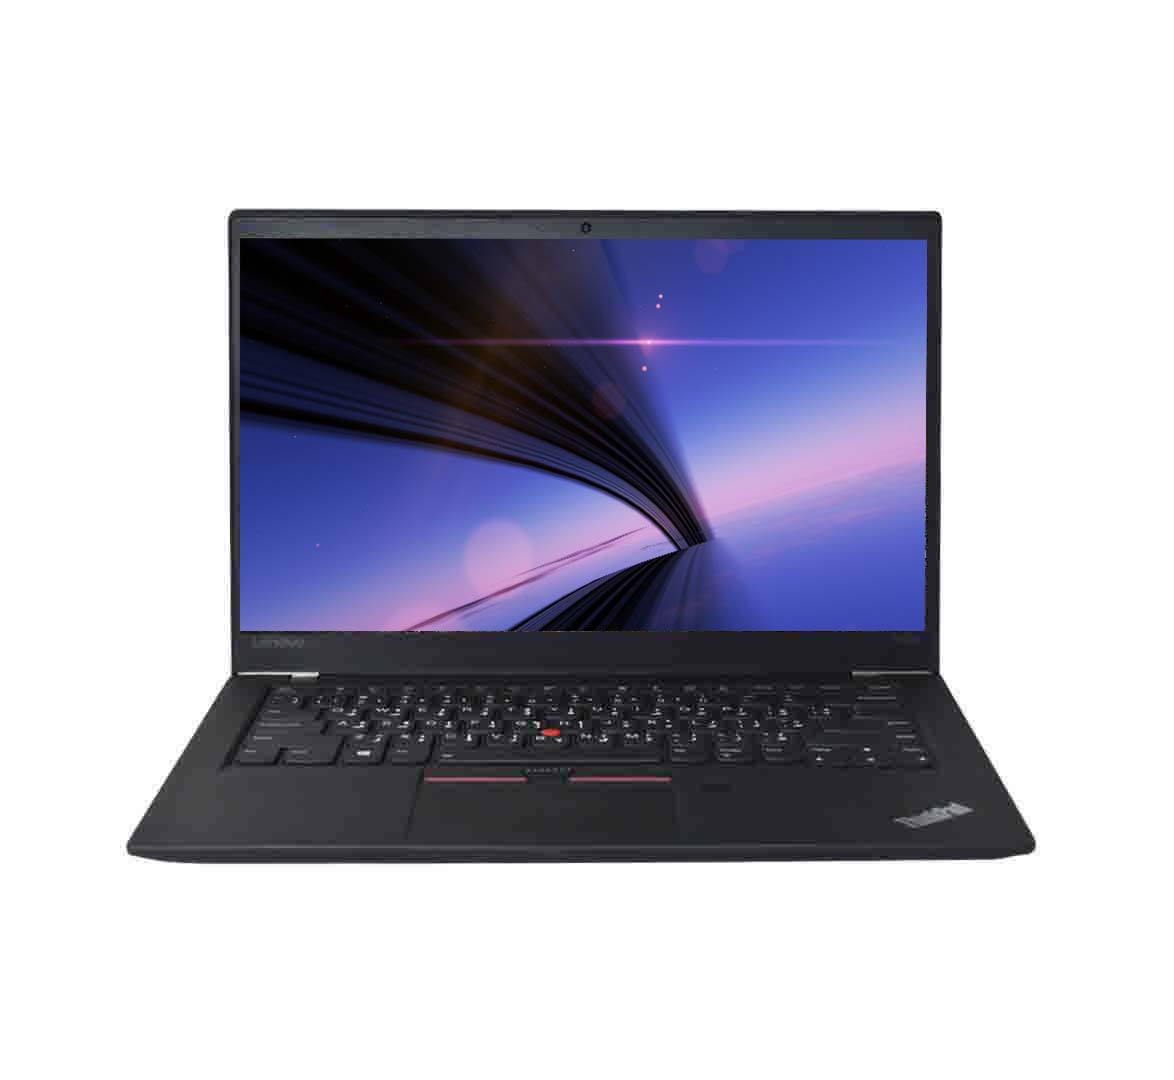 Lenovo ThinkPad T470 Business Laptop, Intel Core i5-6th Gen CPU, 20GB RAM, 256GB SSD, 14 inch Display, Windows 10 Pro, Refurbished Laptop